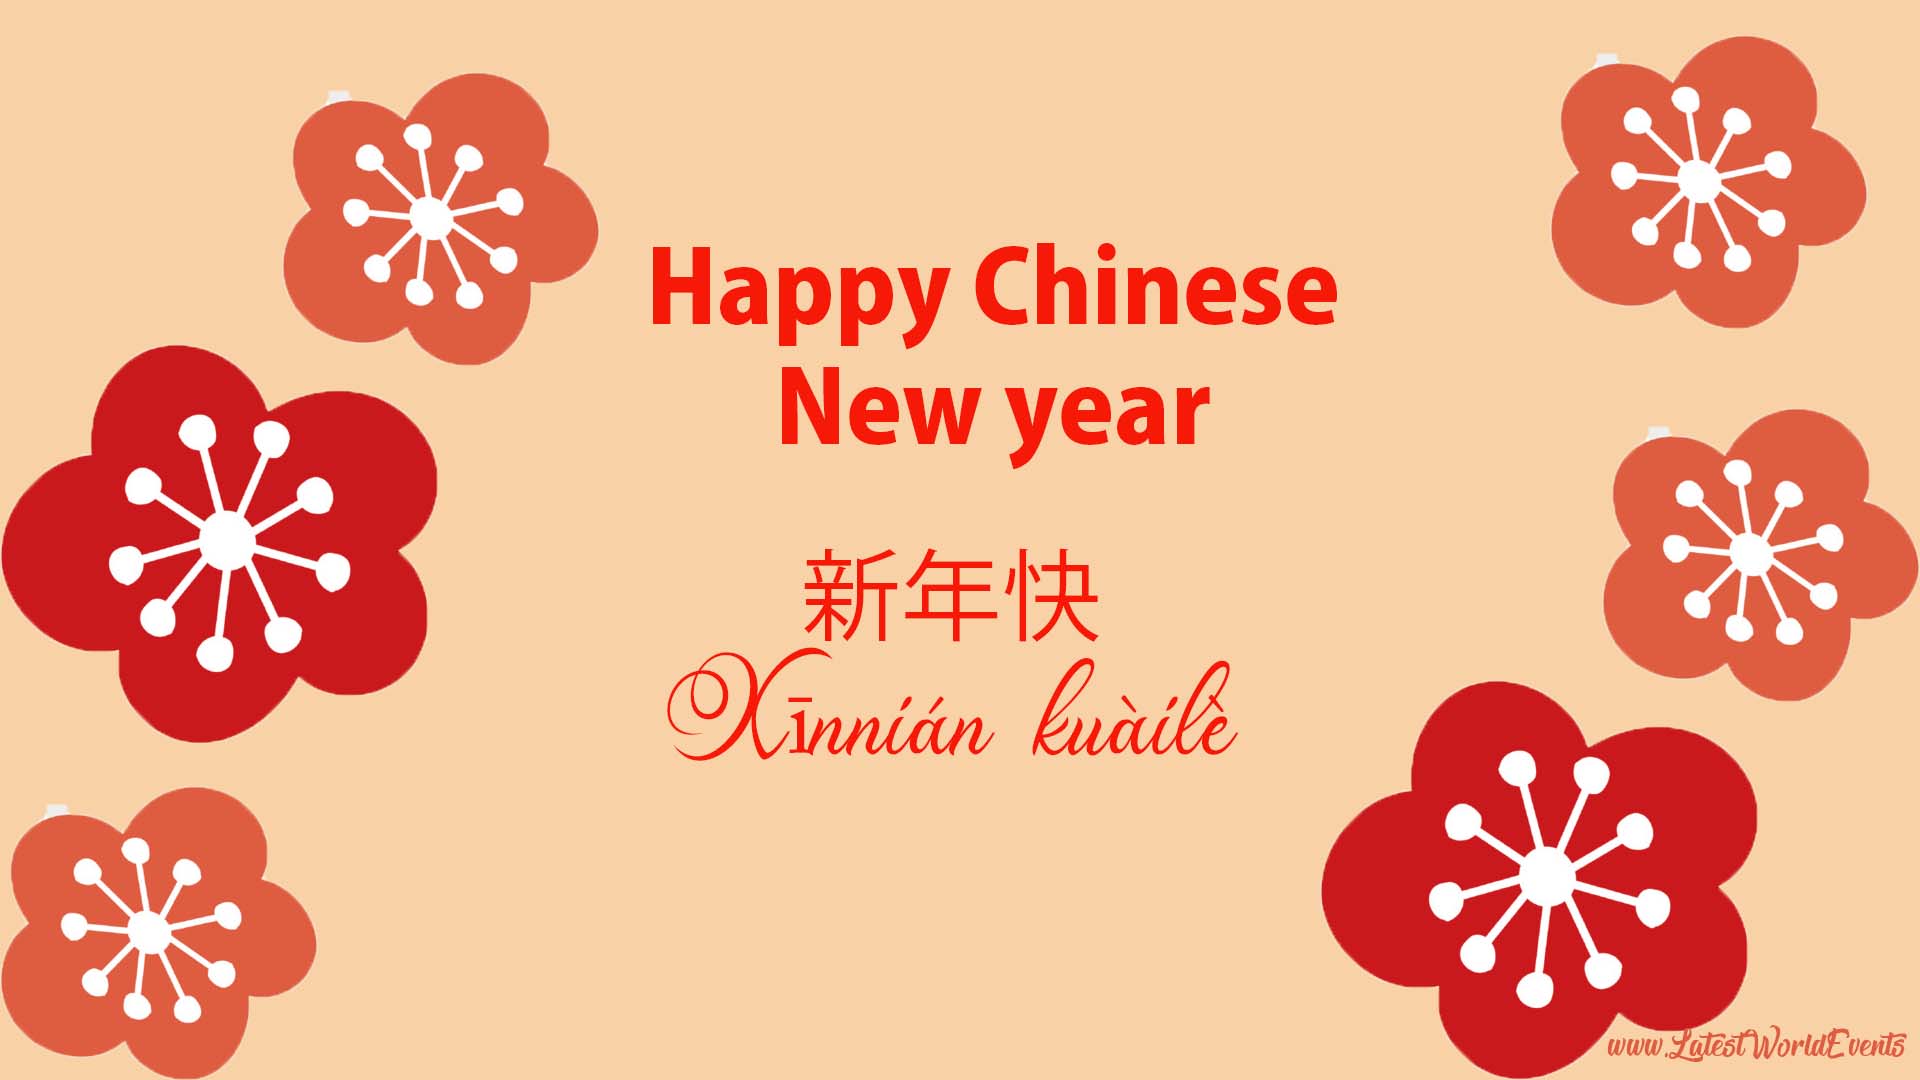 Chinese New Year 2022 Image & Chinese New Year wishes